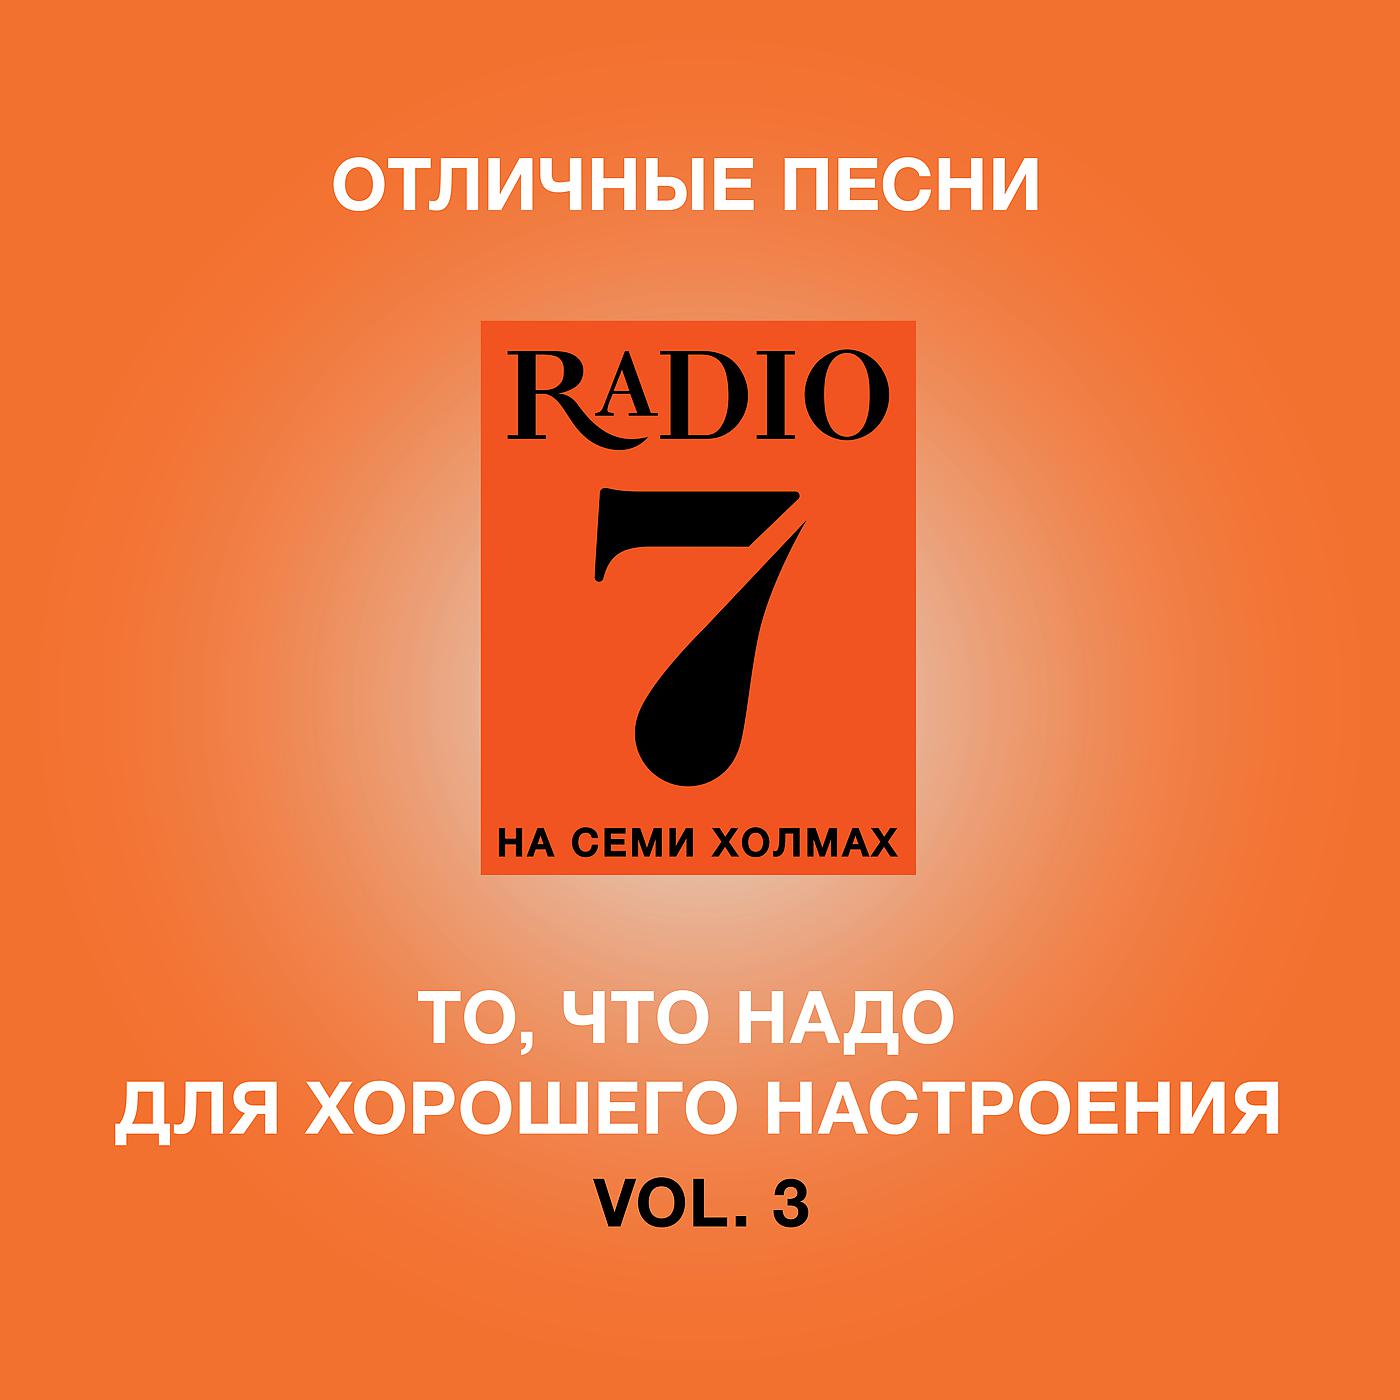 Включи гимн радио. Радио 7. Радио 7 на семи холмах. Радио 7 логотип. Радио 7 на семи холмах логотип.